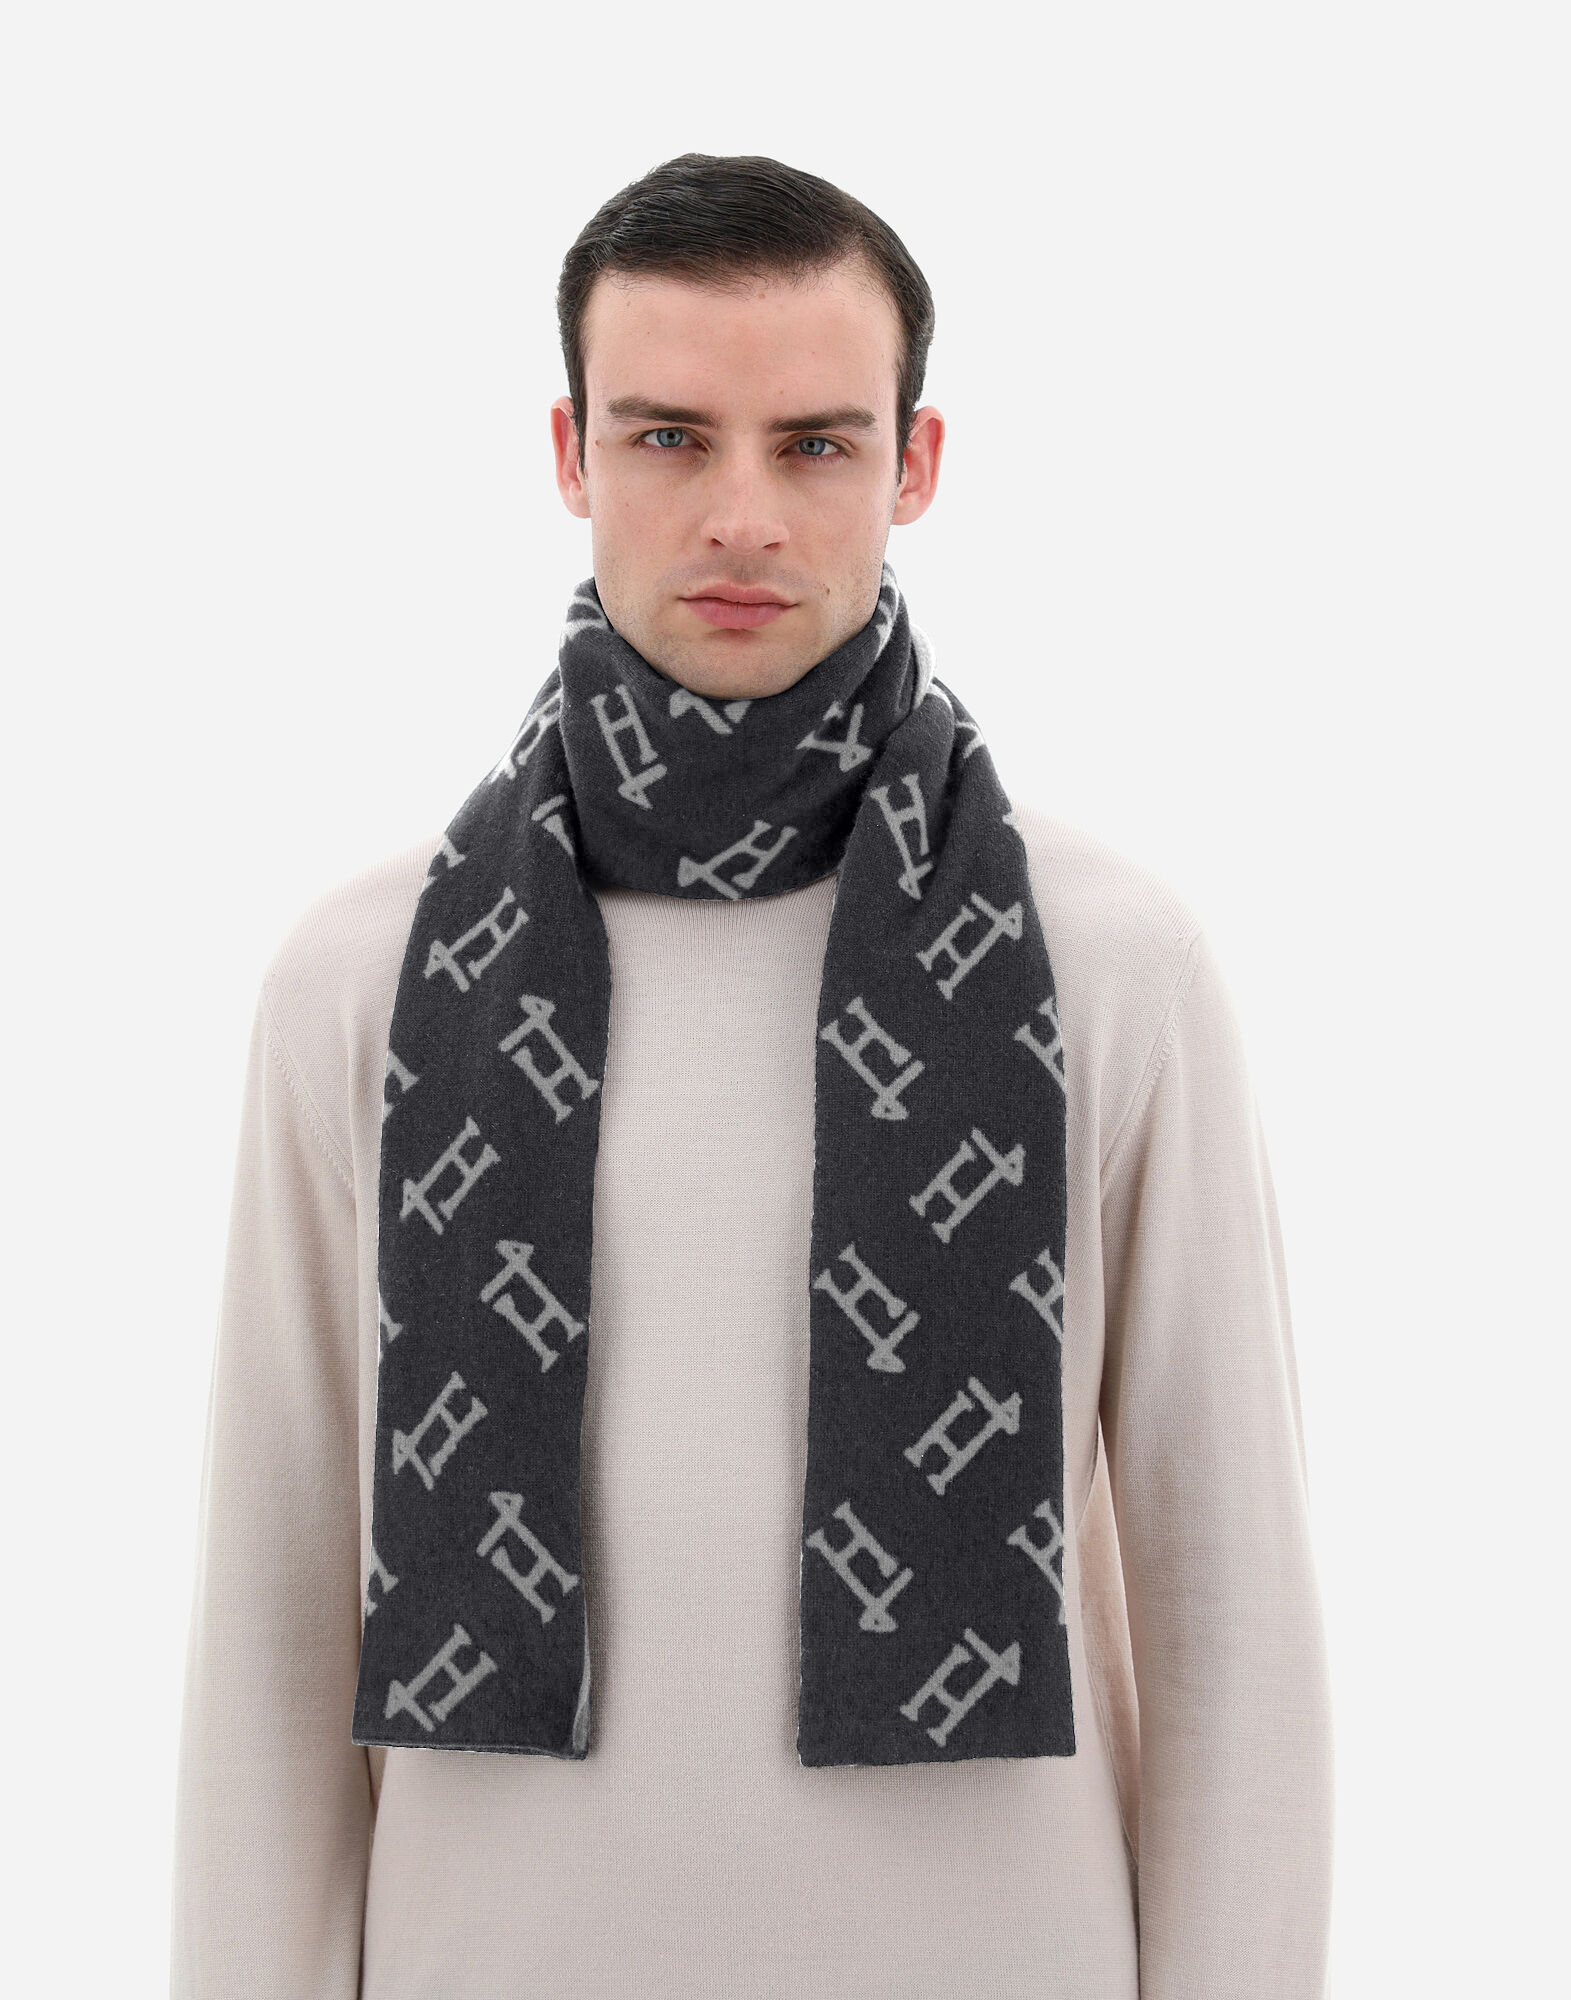 Shop Louis Vuitton Cold reykjavik scarf (ECHARPE COLD REYKJAVIK, COLD  REYKJAVIK SCARF, M74354, M74353) by Mikrie